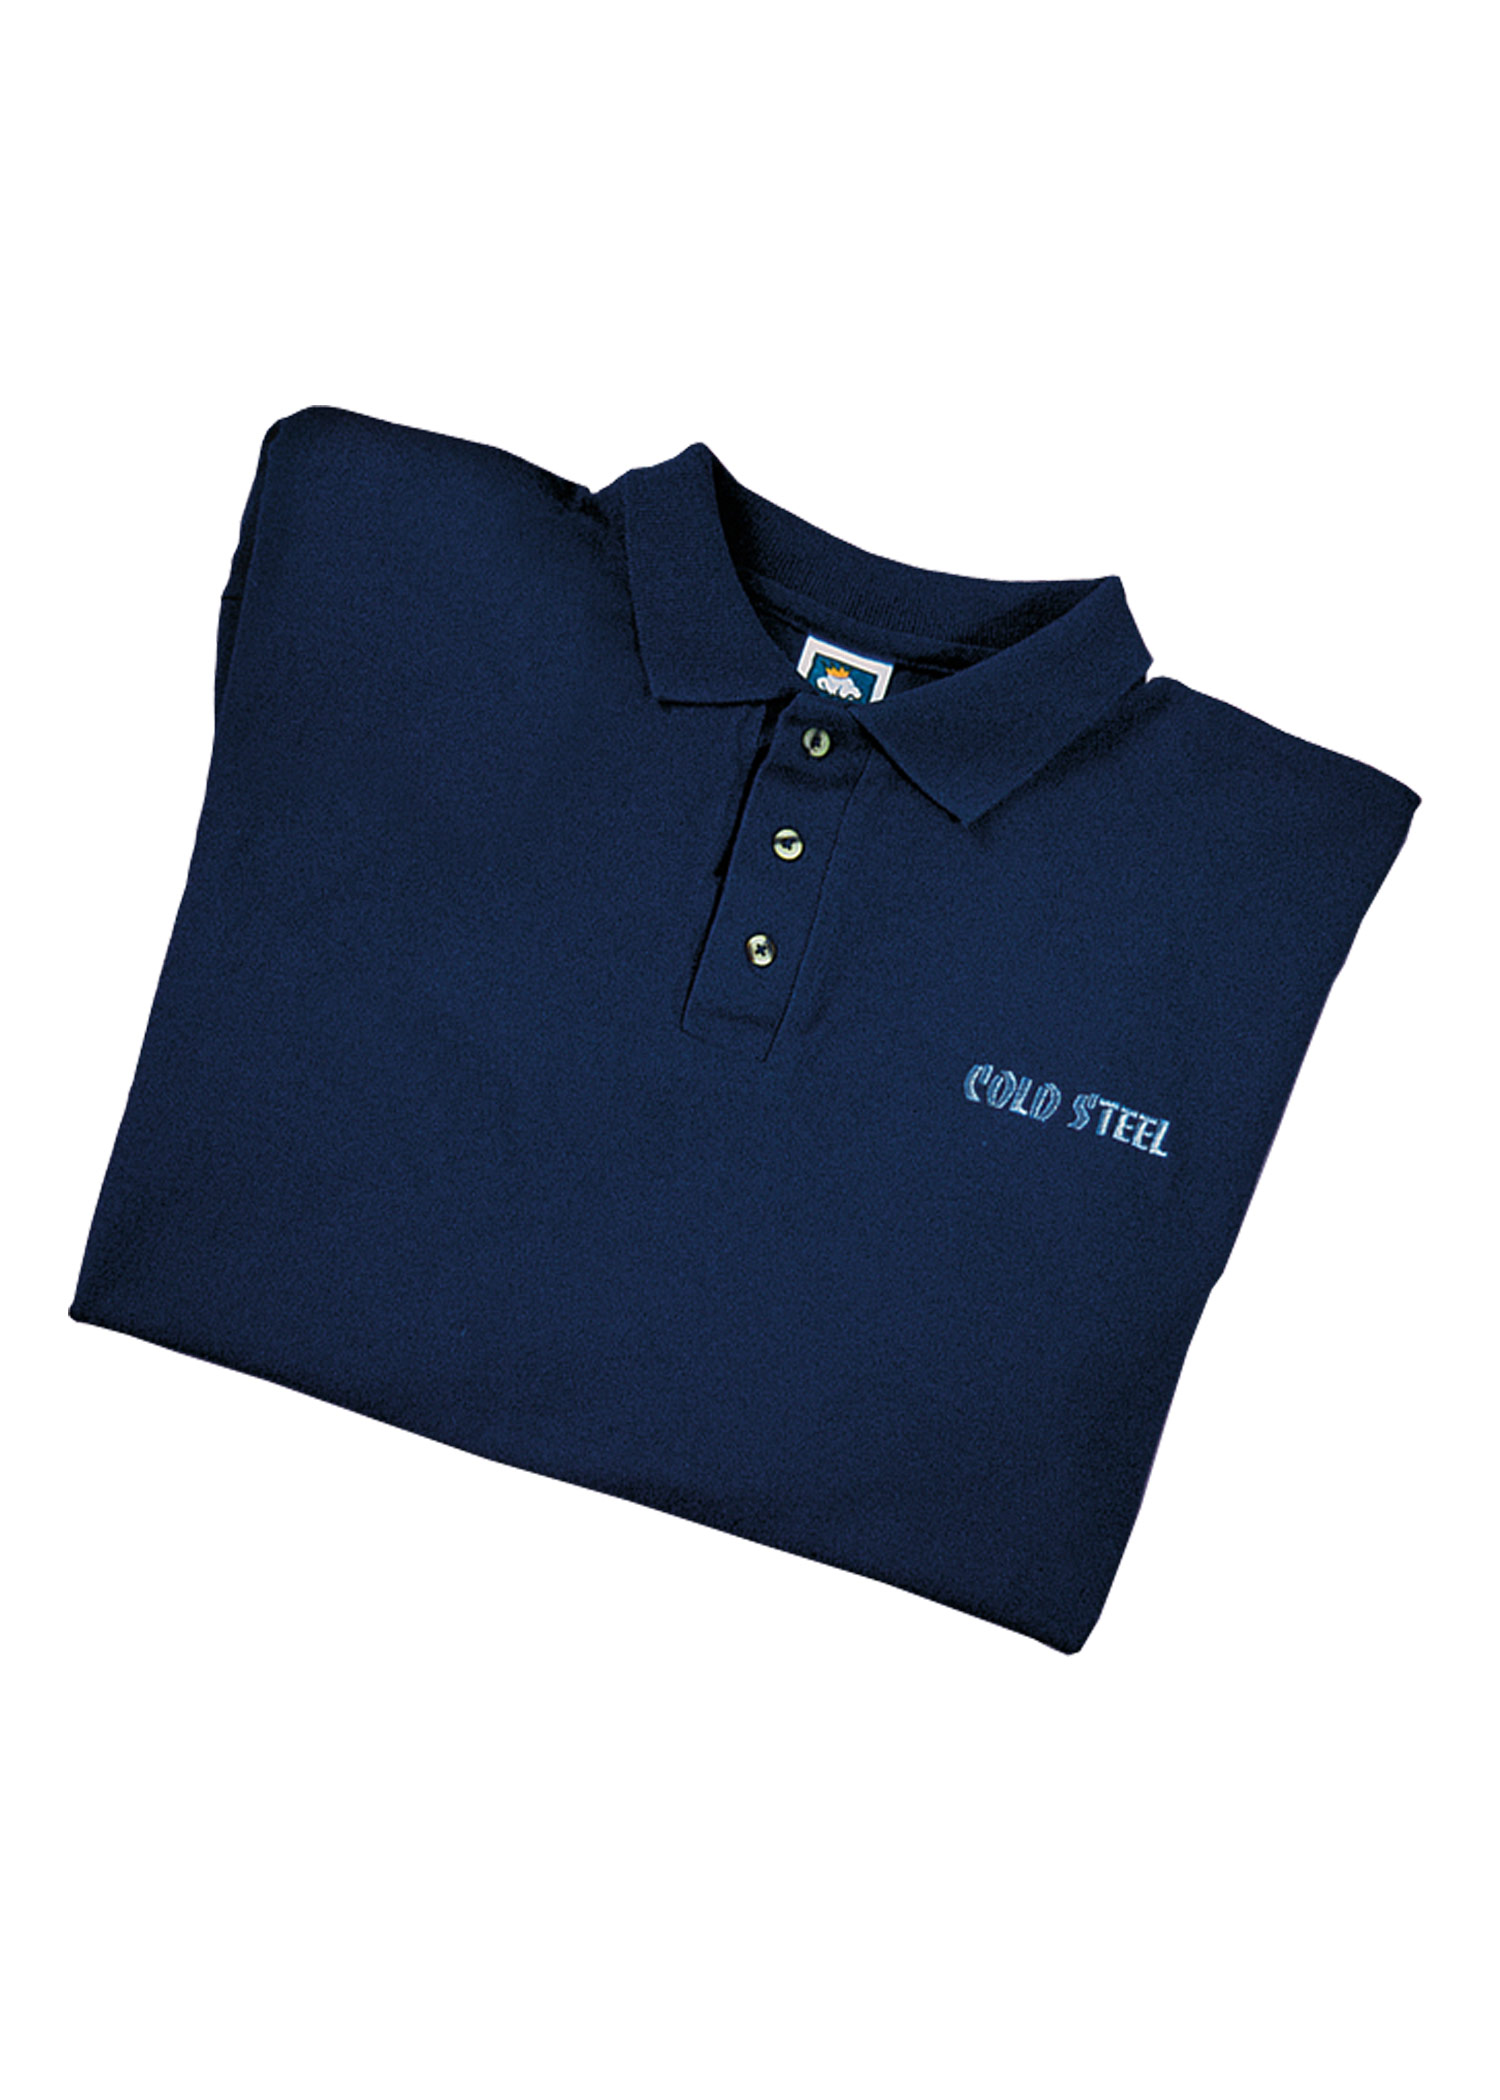 Cold Steel Poloshirt, marineblau, Größe XL